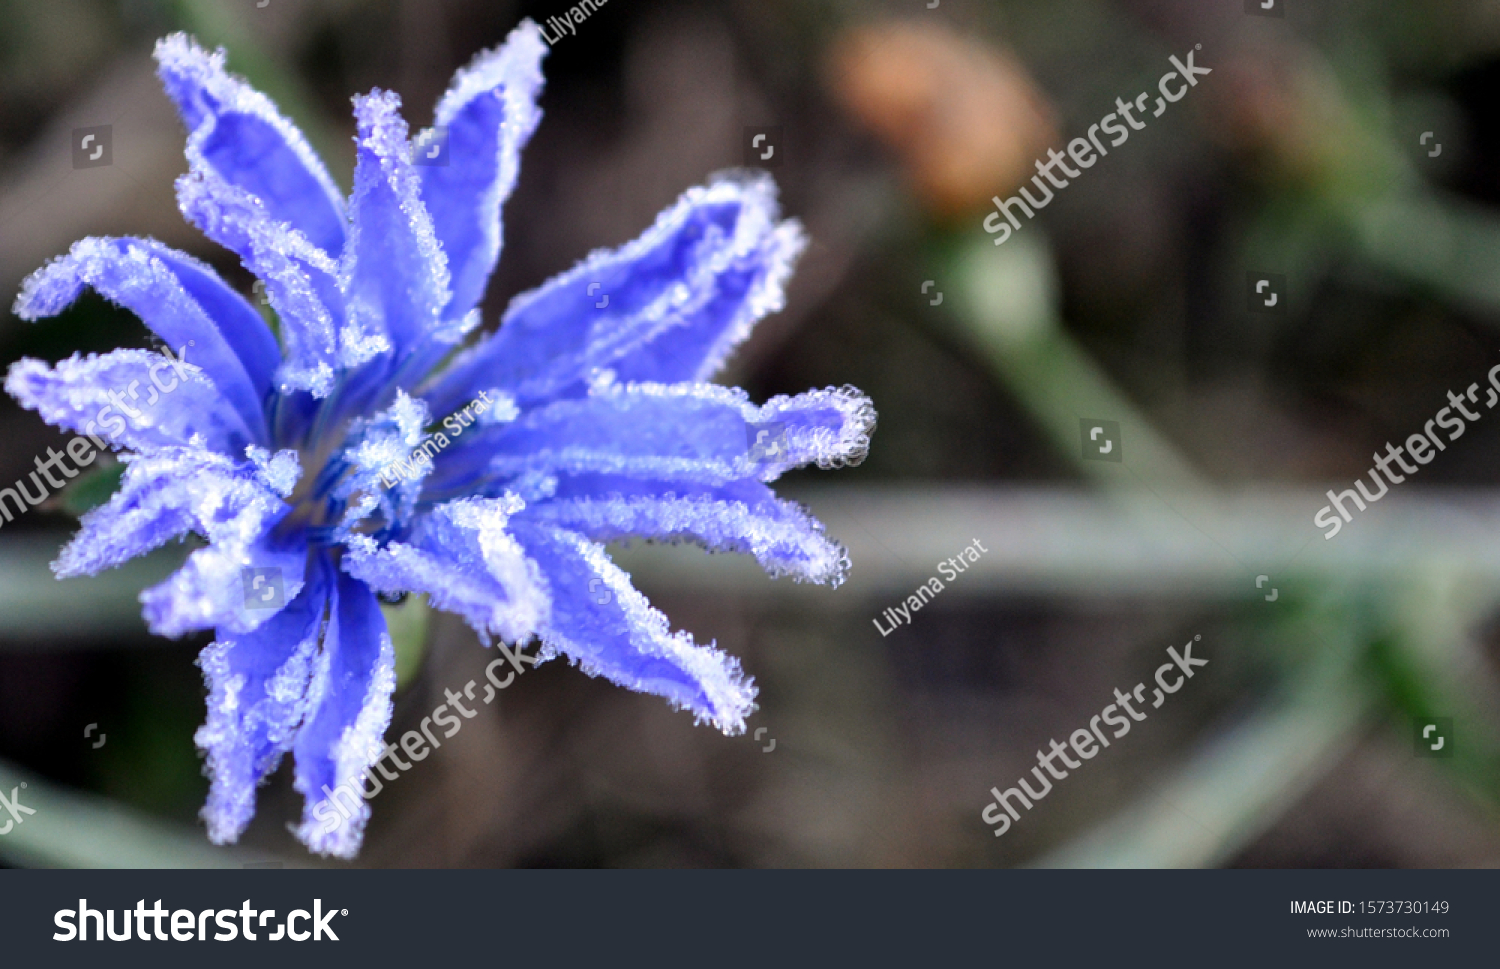 Photo of chicory flower (Cichorium intybus)  closeup. Blue daisy, blue dandelion, blue sailors. Hoar frost on the flower. #1573730149